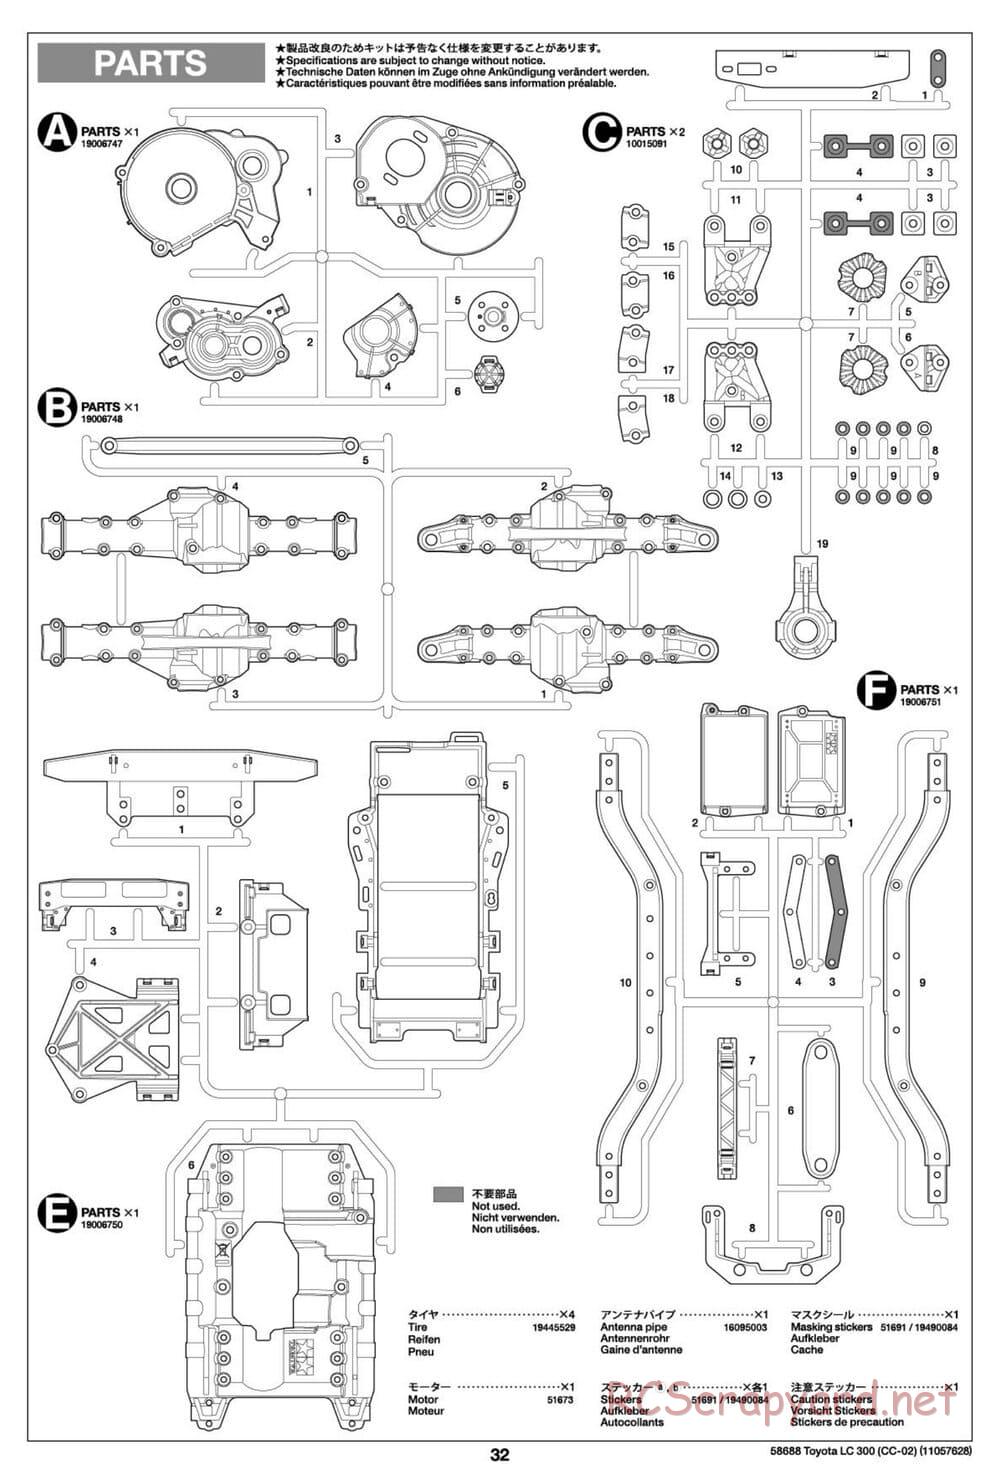 Tamiya - Toyota Land Cruiser 300 - CC-02 Chassis - Manual - Page 32